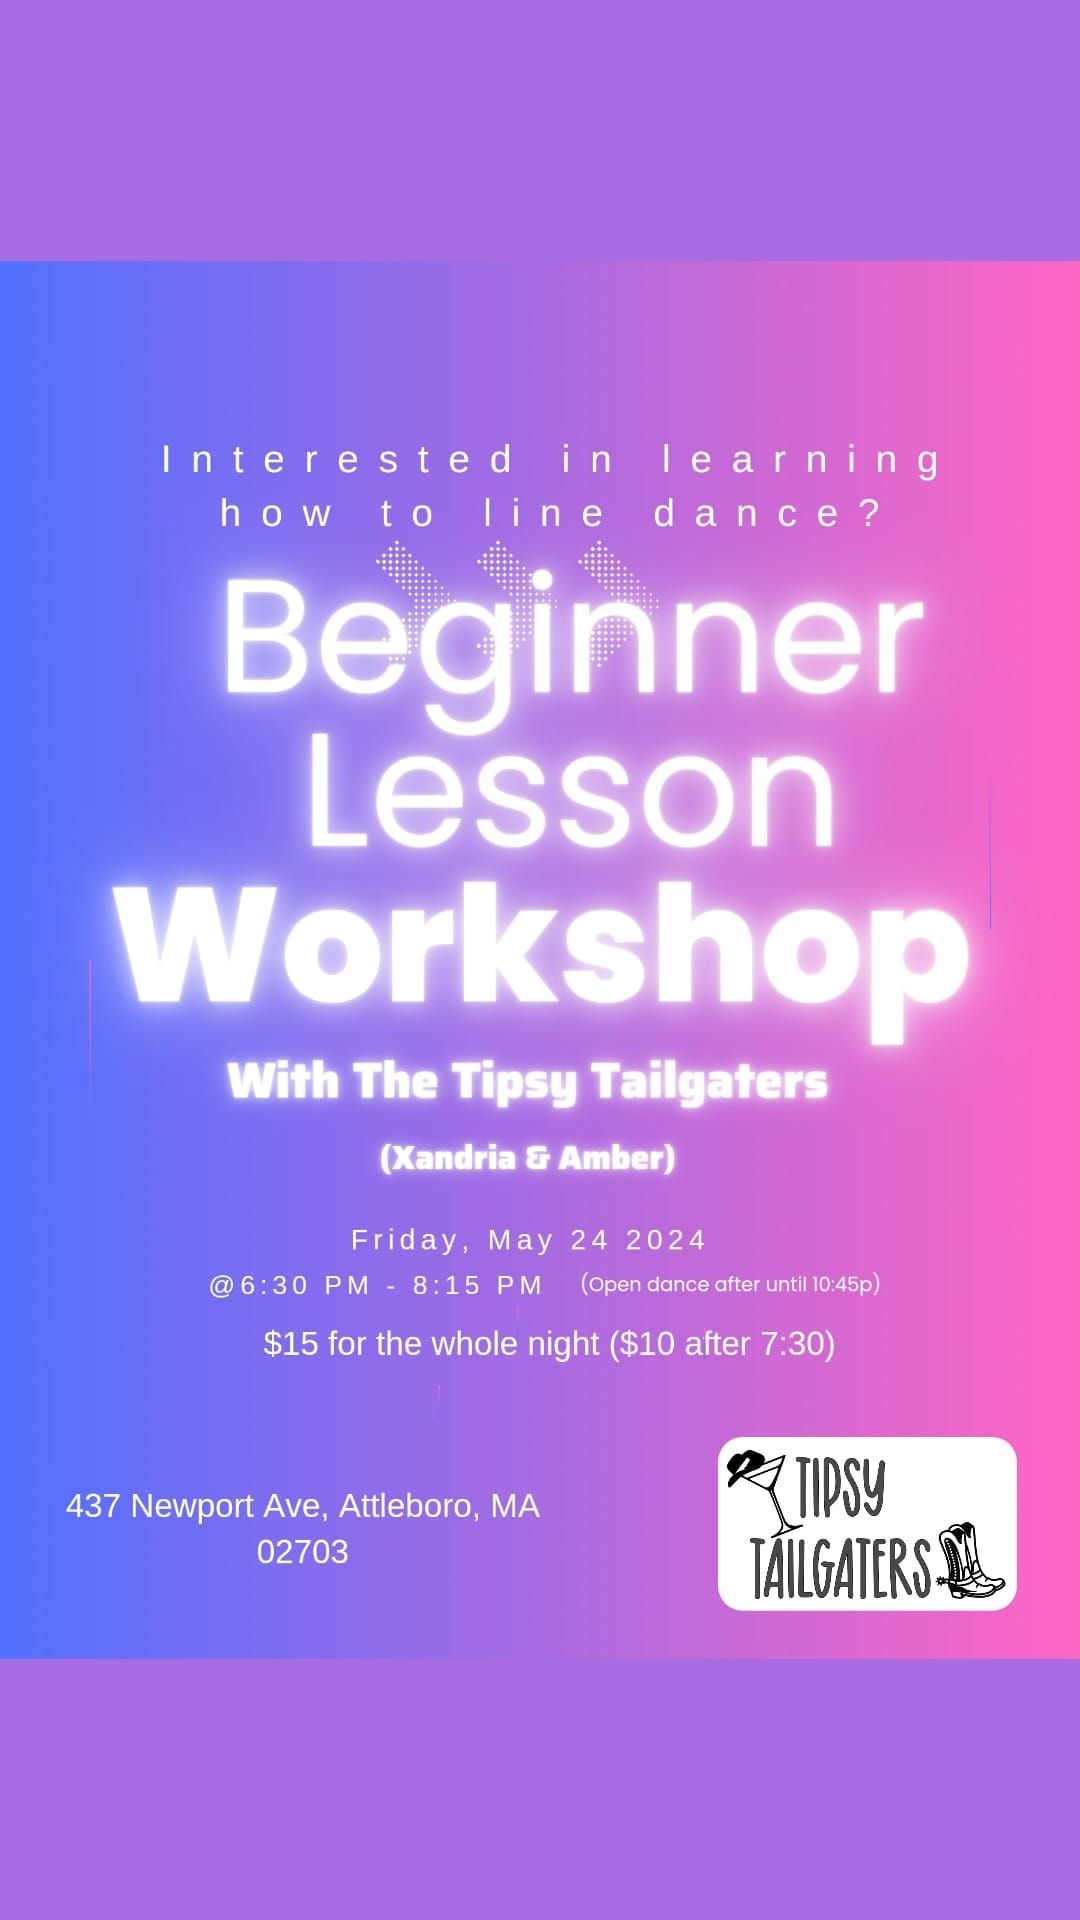 Beginner Lessons Workshop